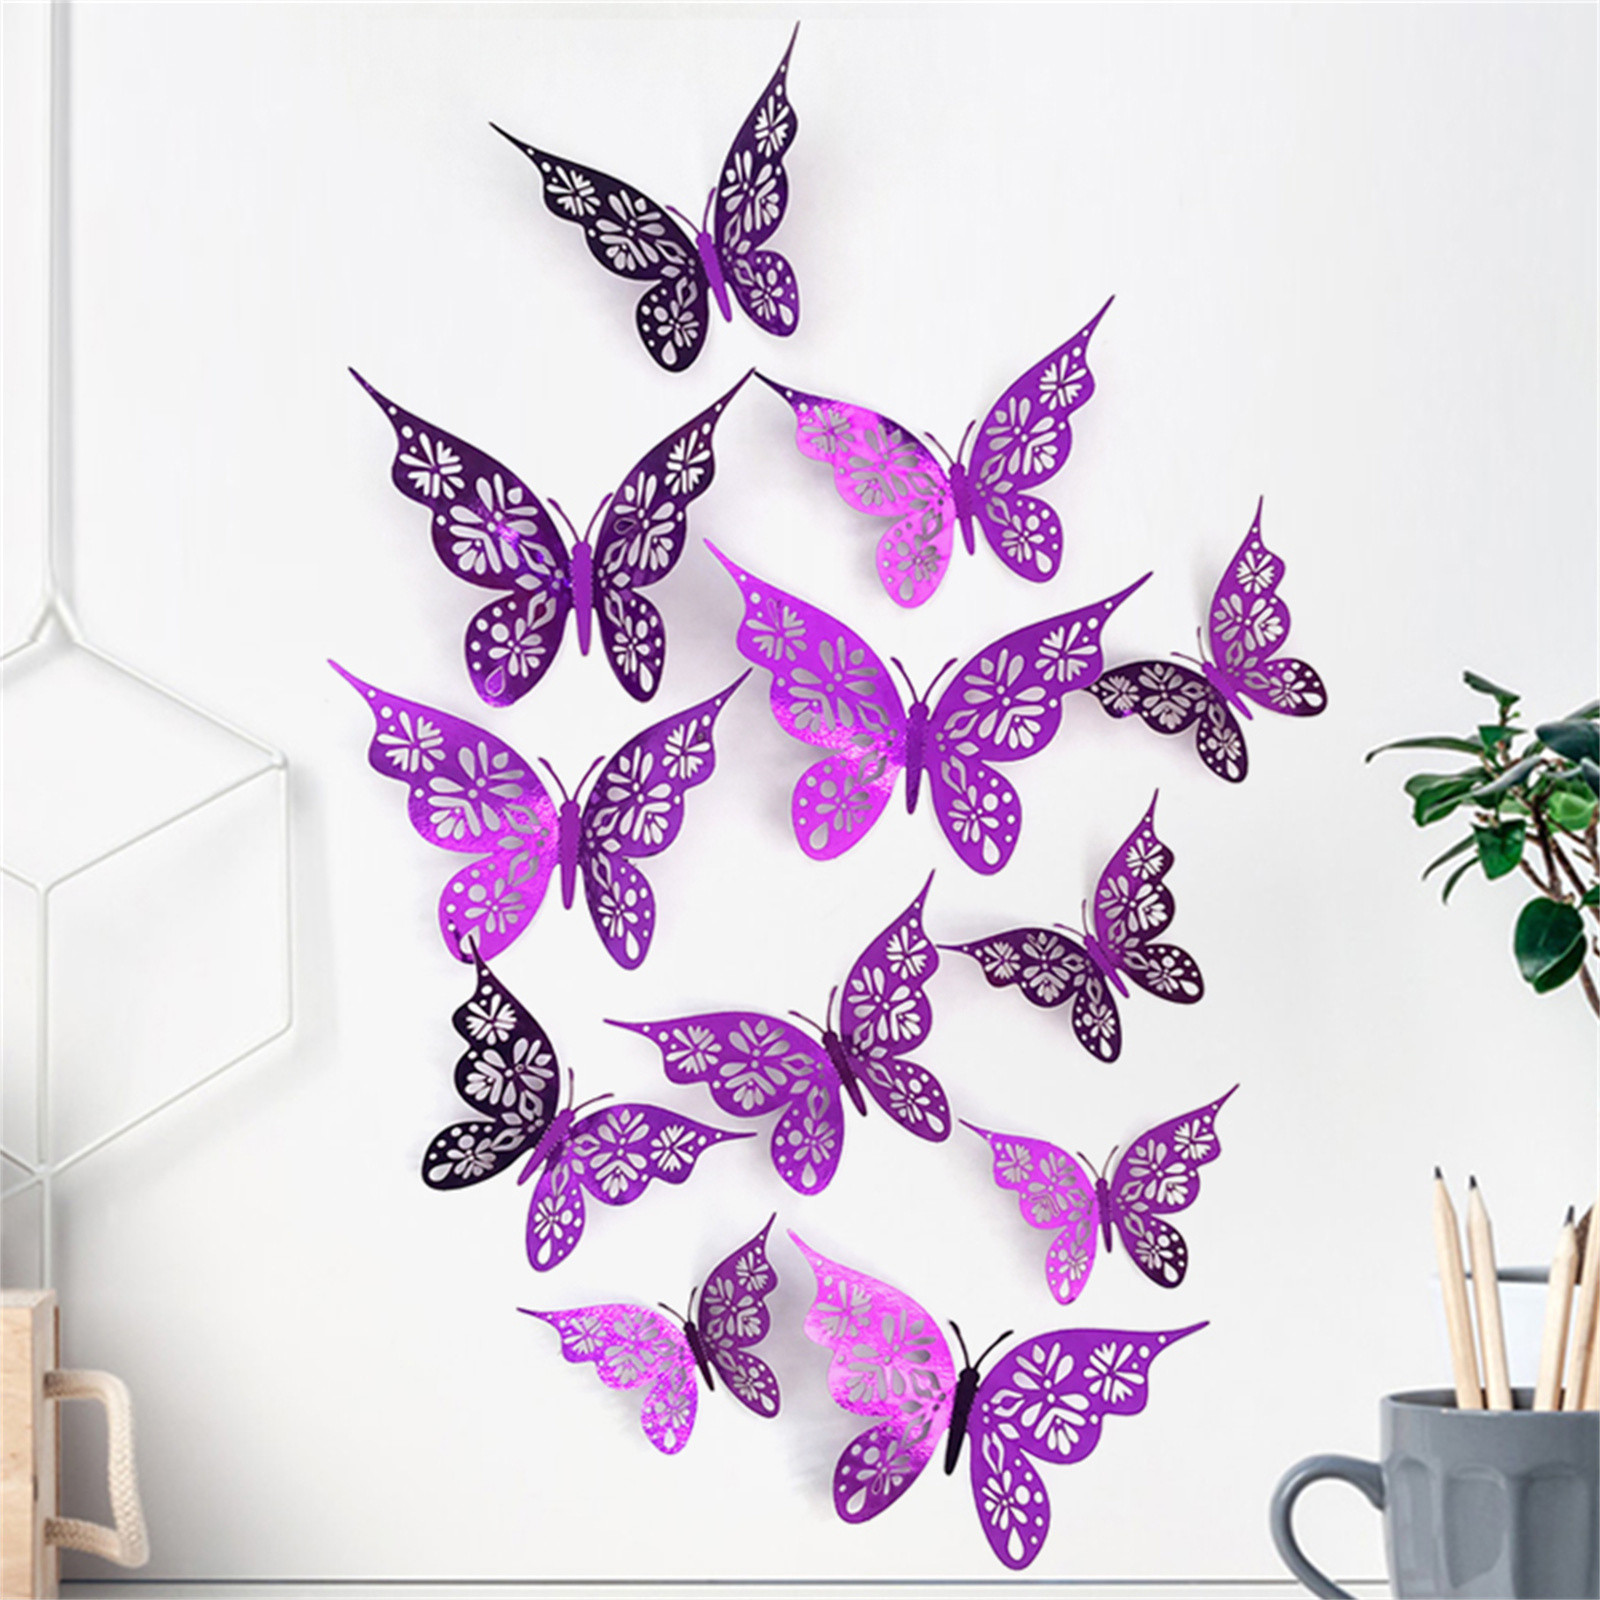 Set de 12 Mariposas Decorativas